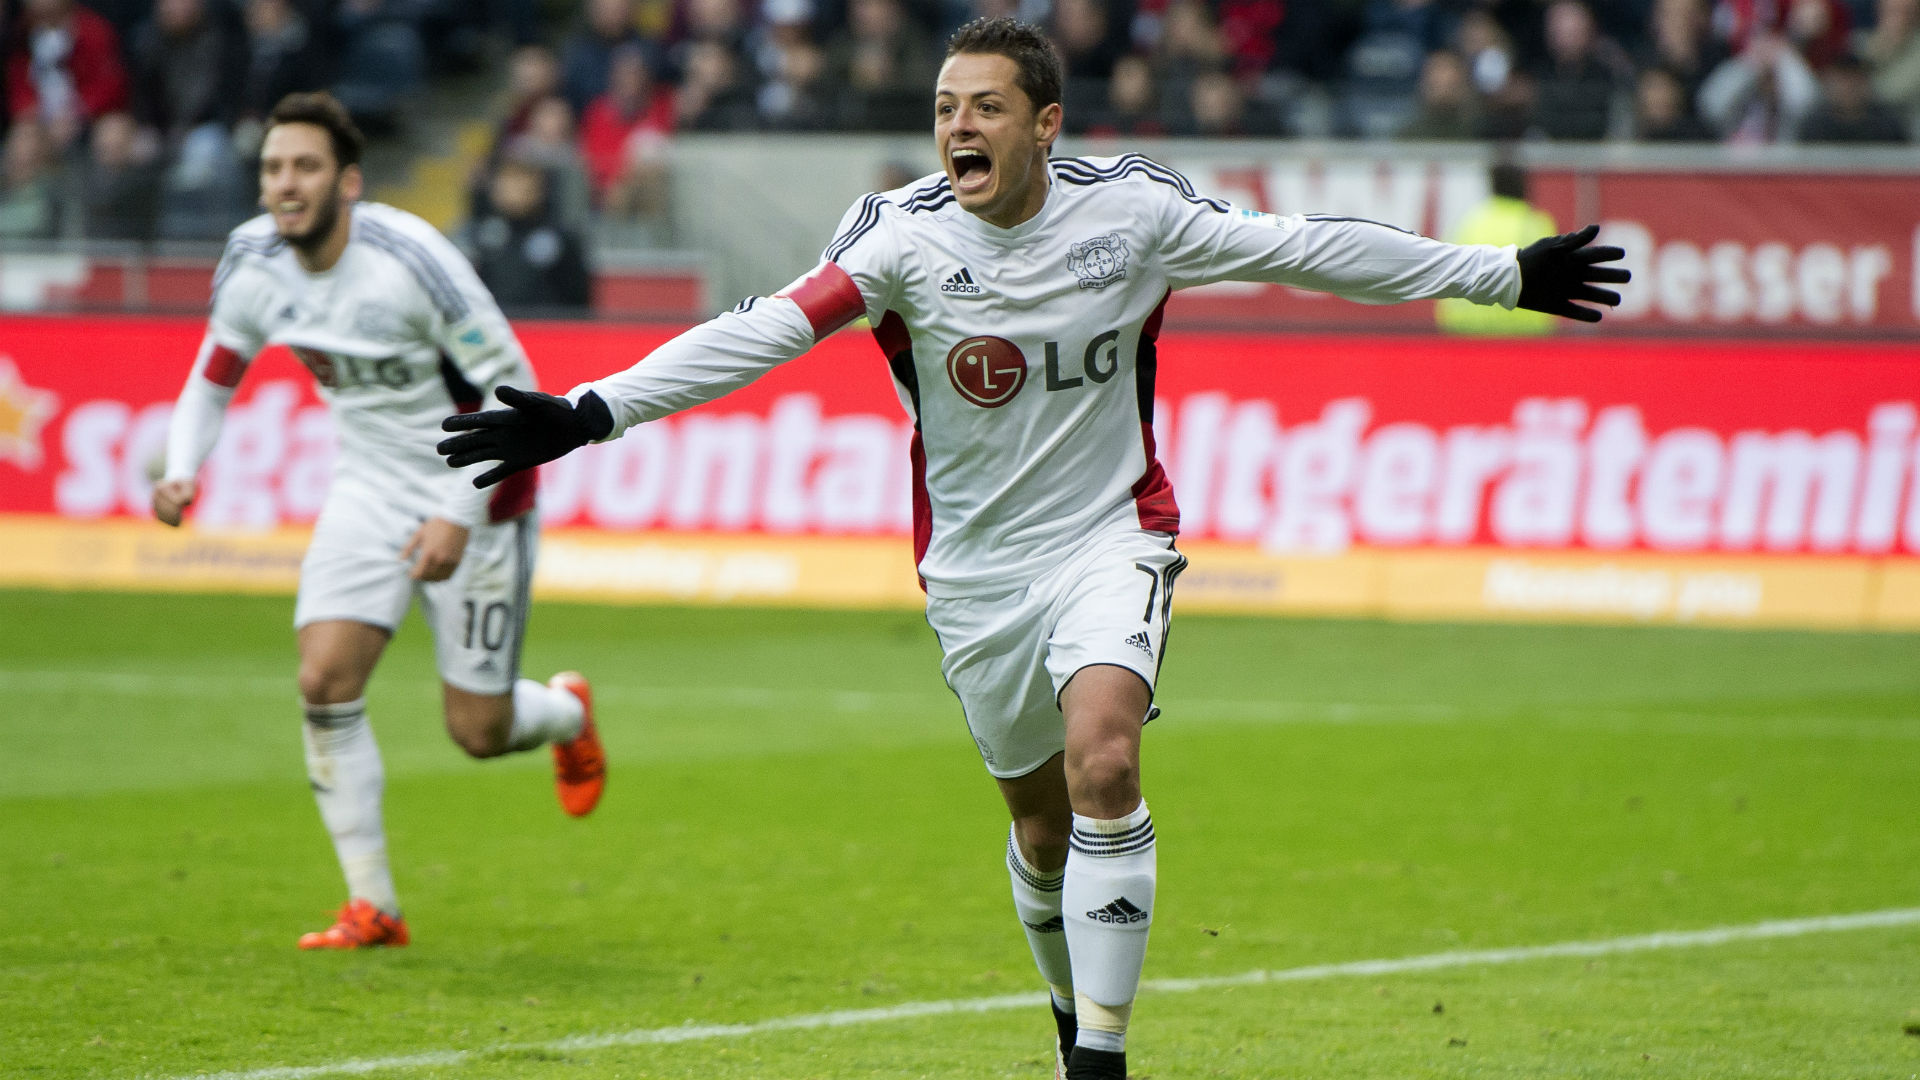 BATE v Bayer Leverkusen: Hernandez out to continue hot streak